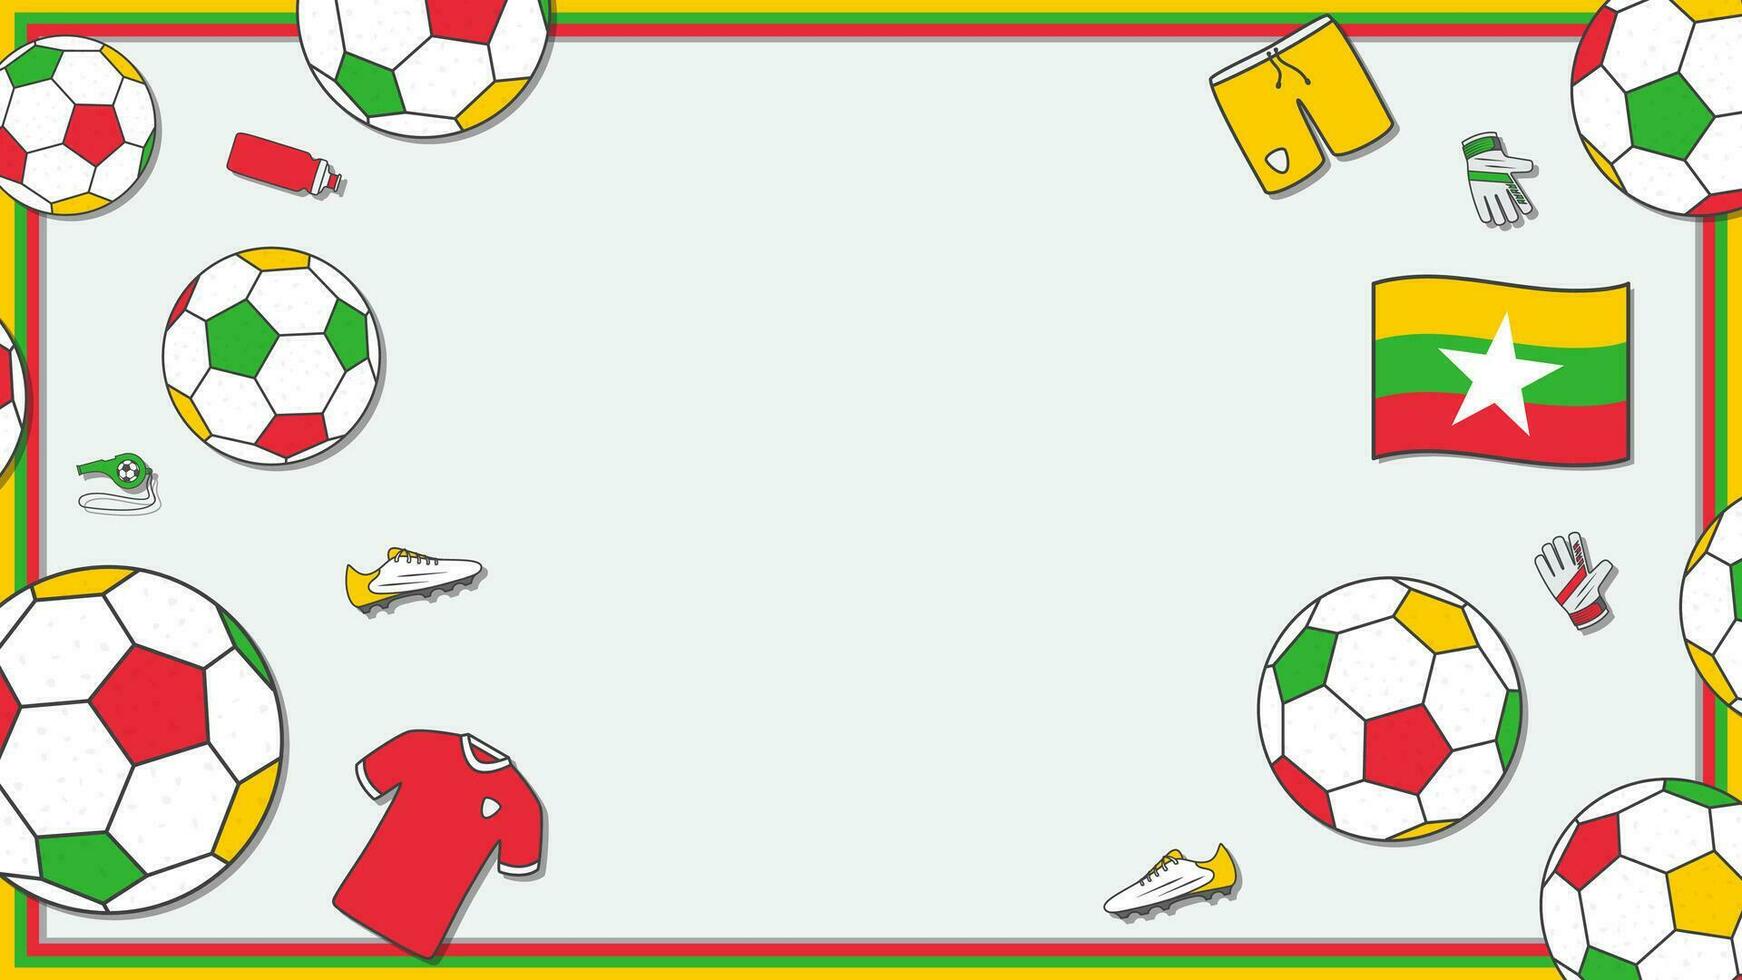 Football Background Design Template. Football Cartoon Vector Illustration. Sport In Myanmar